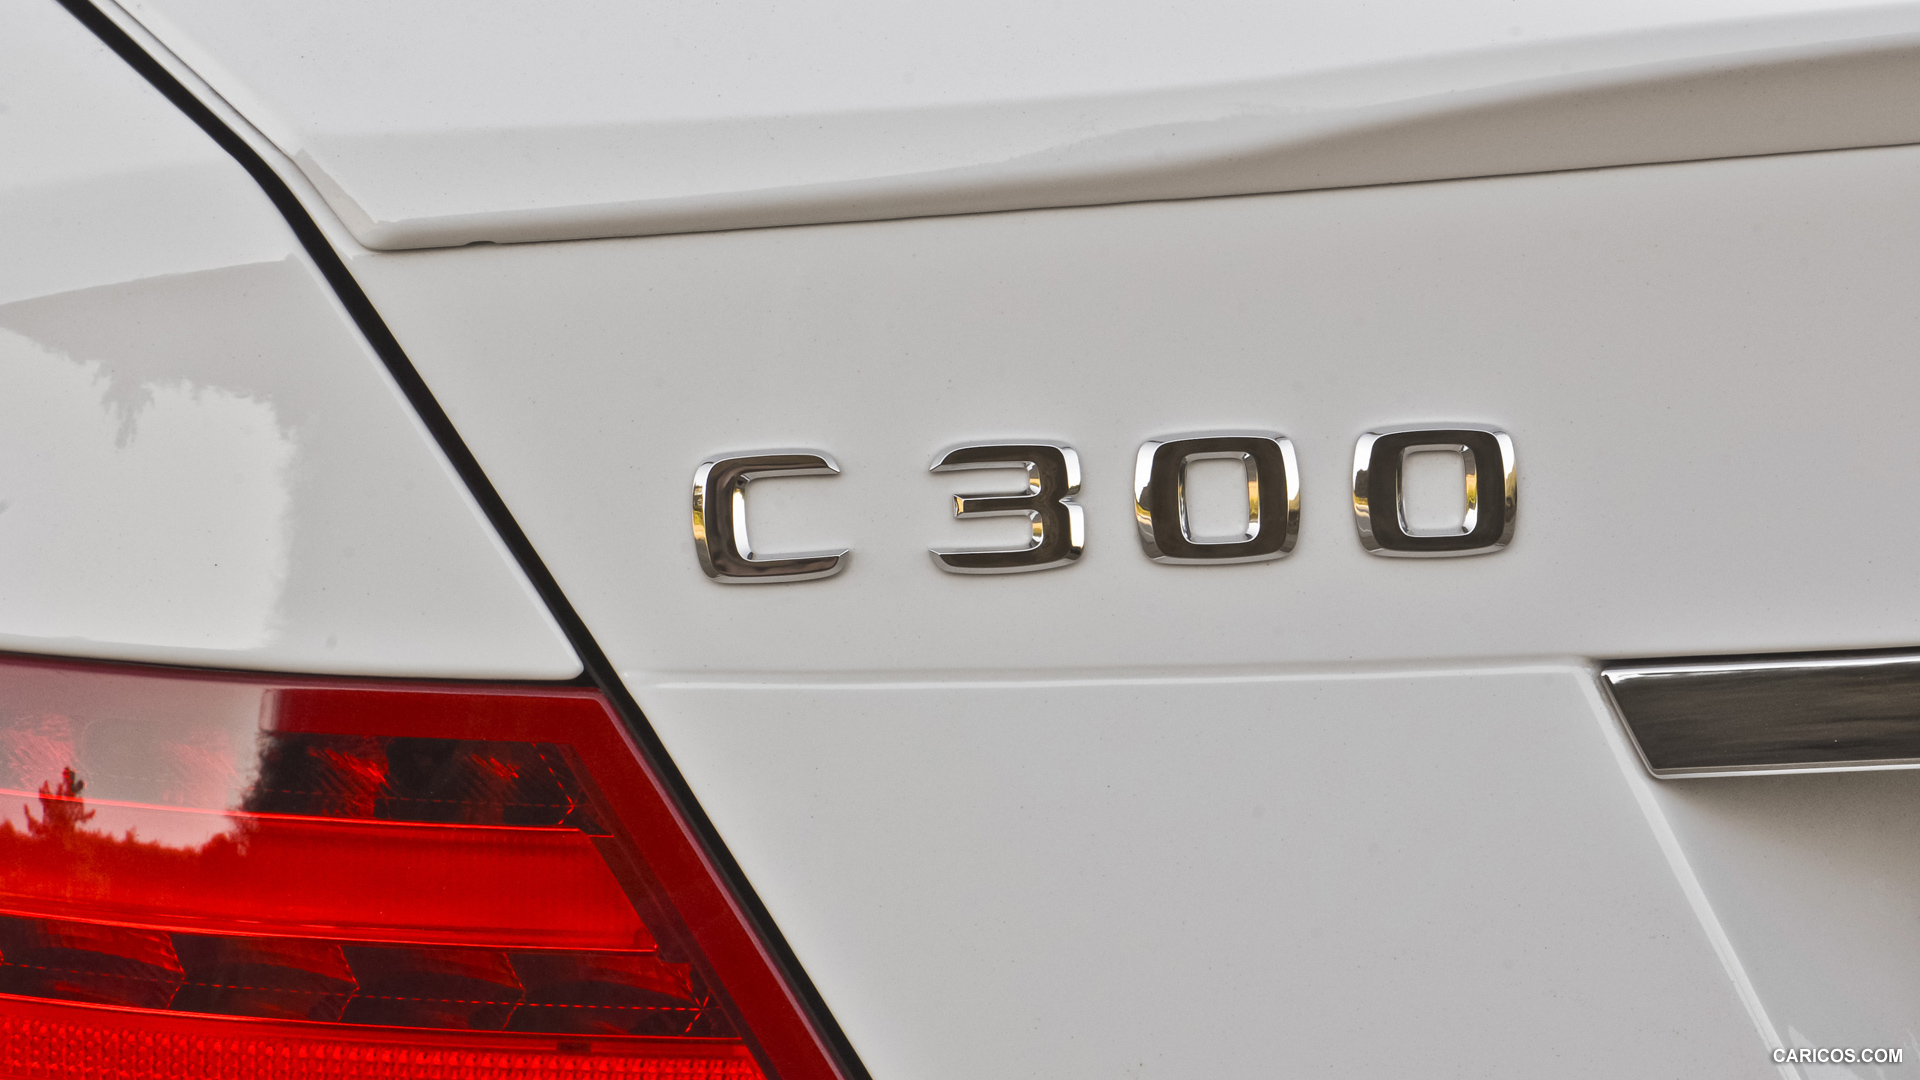 2013 Mercedes-Benz C300 4MATIC Sedan Sport Package Plus  - Badge, #77 of 122